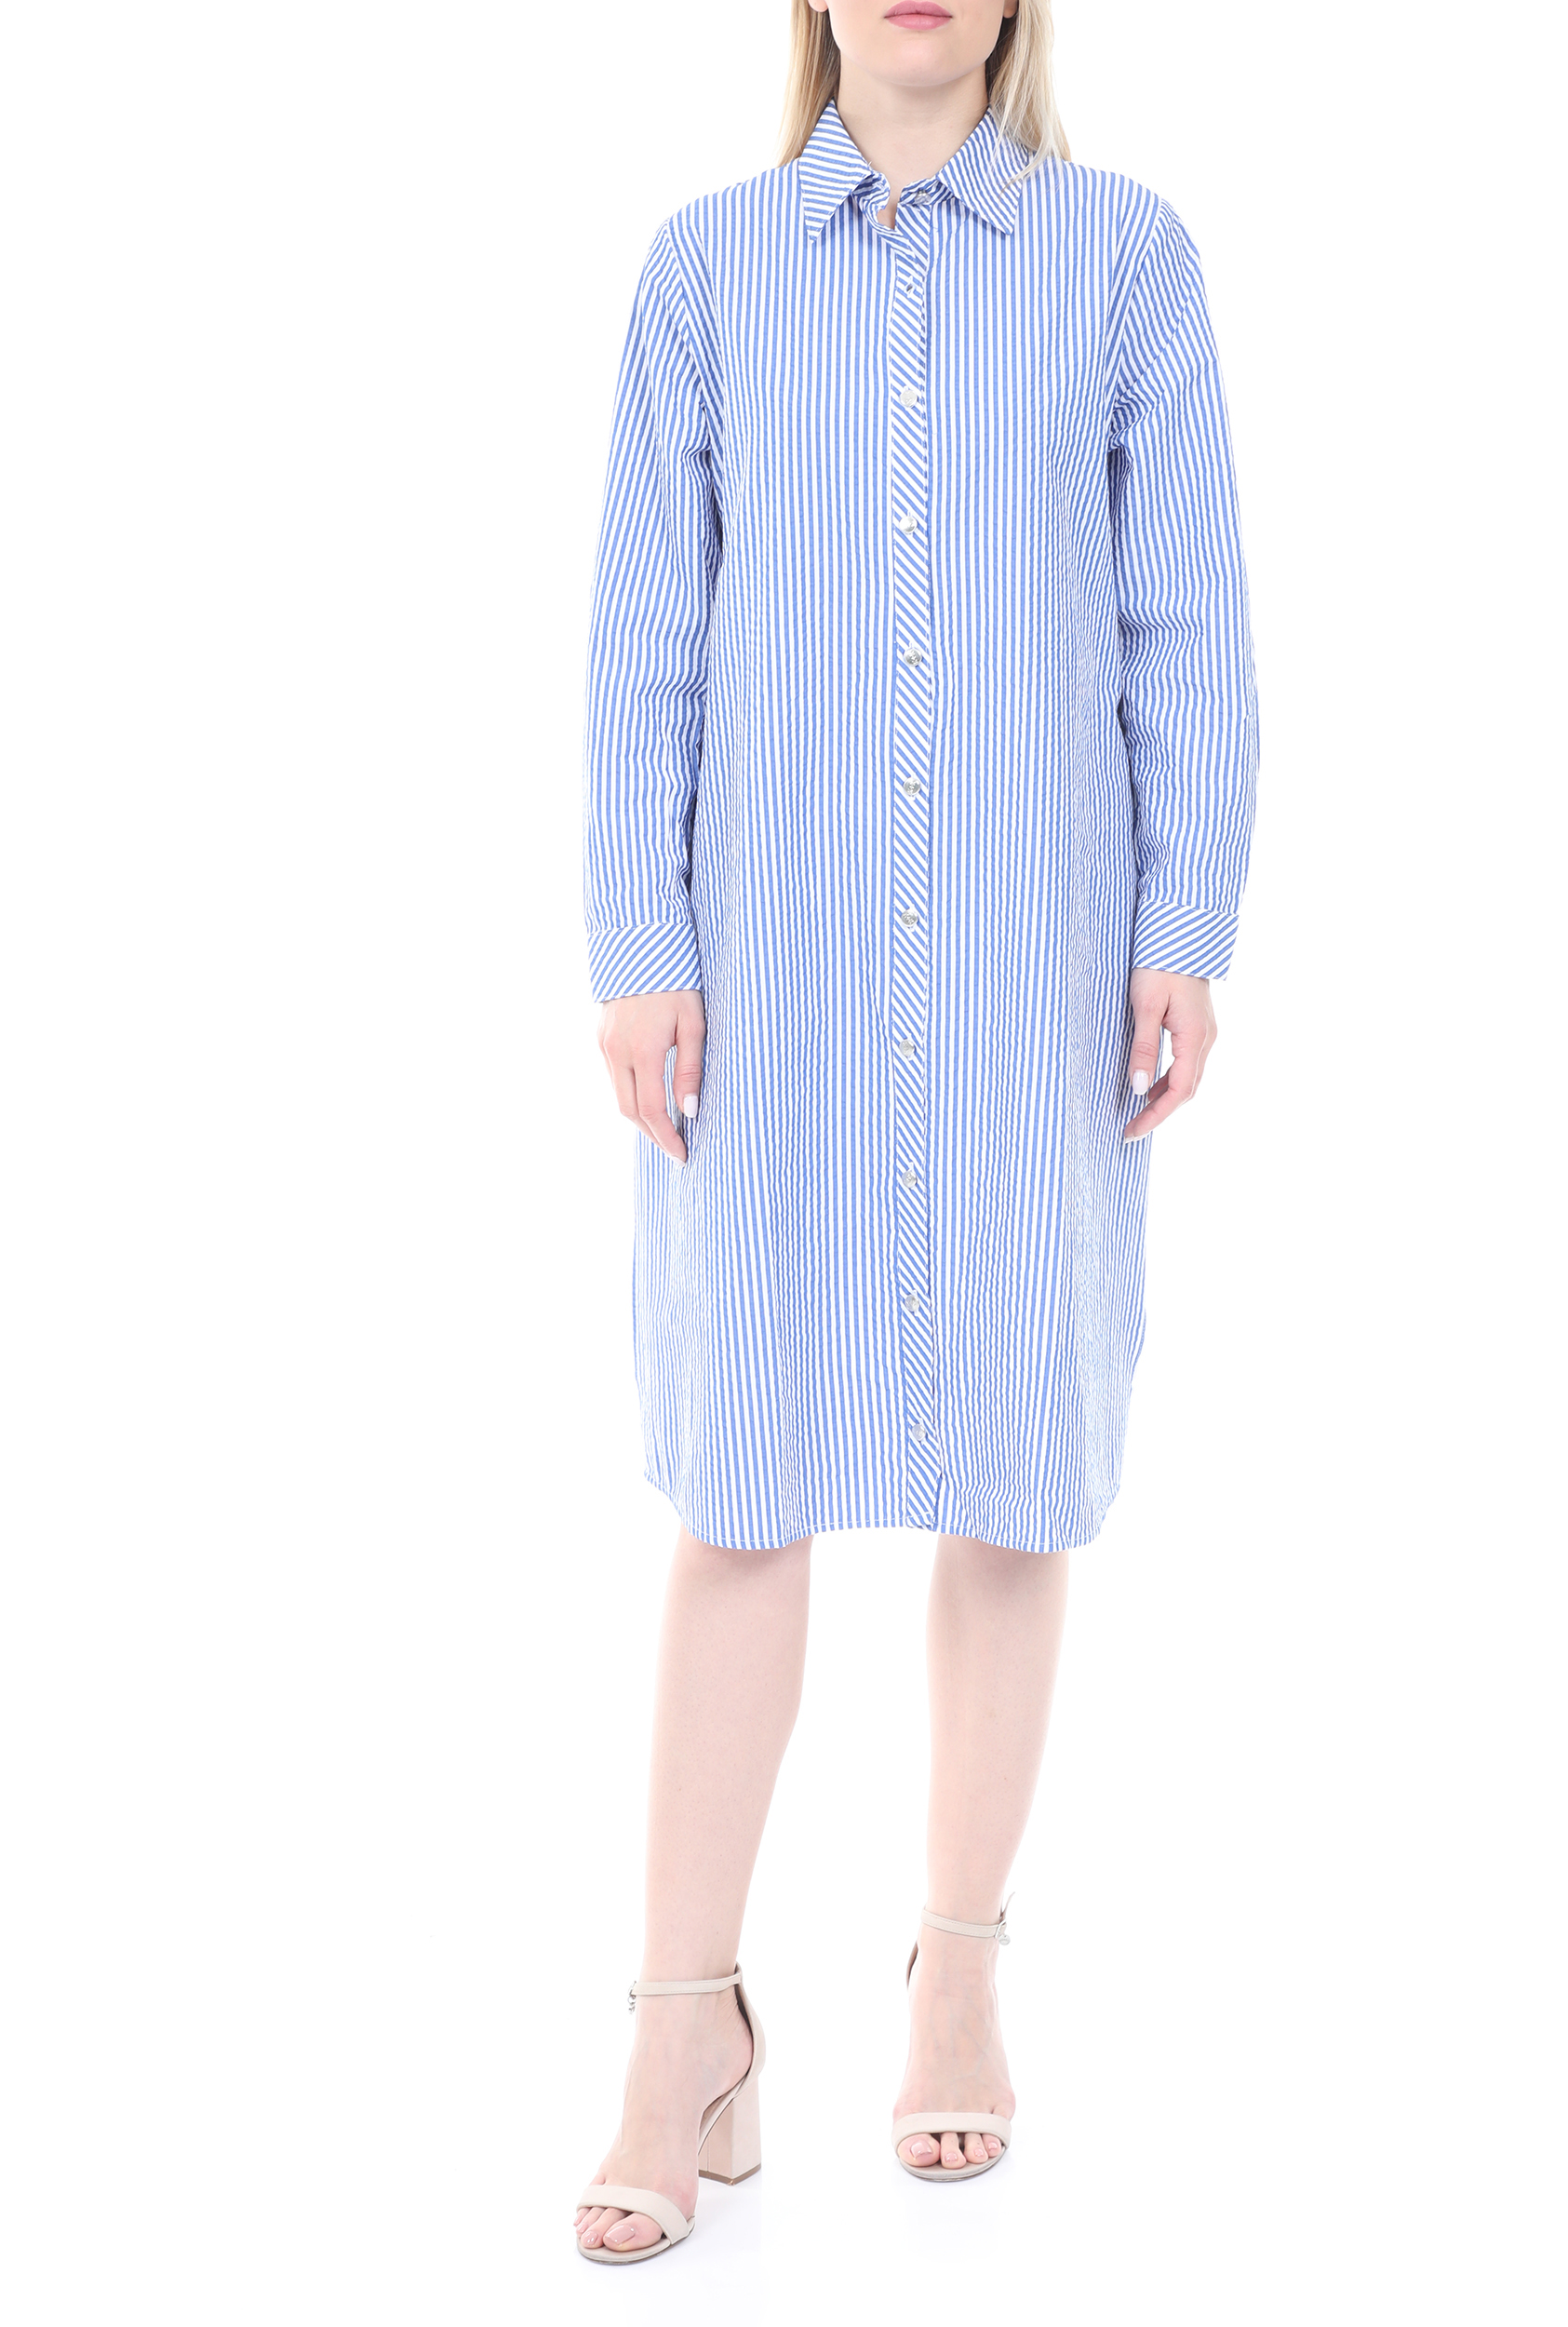 KENDALL + KYLIE – Γυναικείο mini φόρεμα KENDALL + KYLIE NAVY STRIPE LOOSE μπλε λευκό 1811155.0-1E01